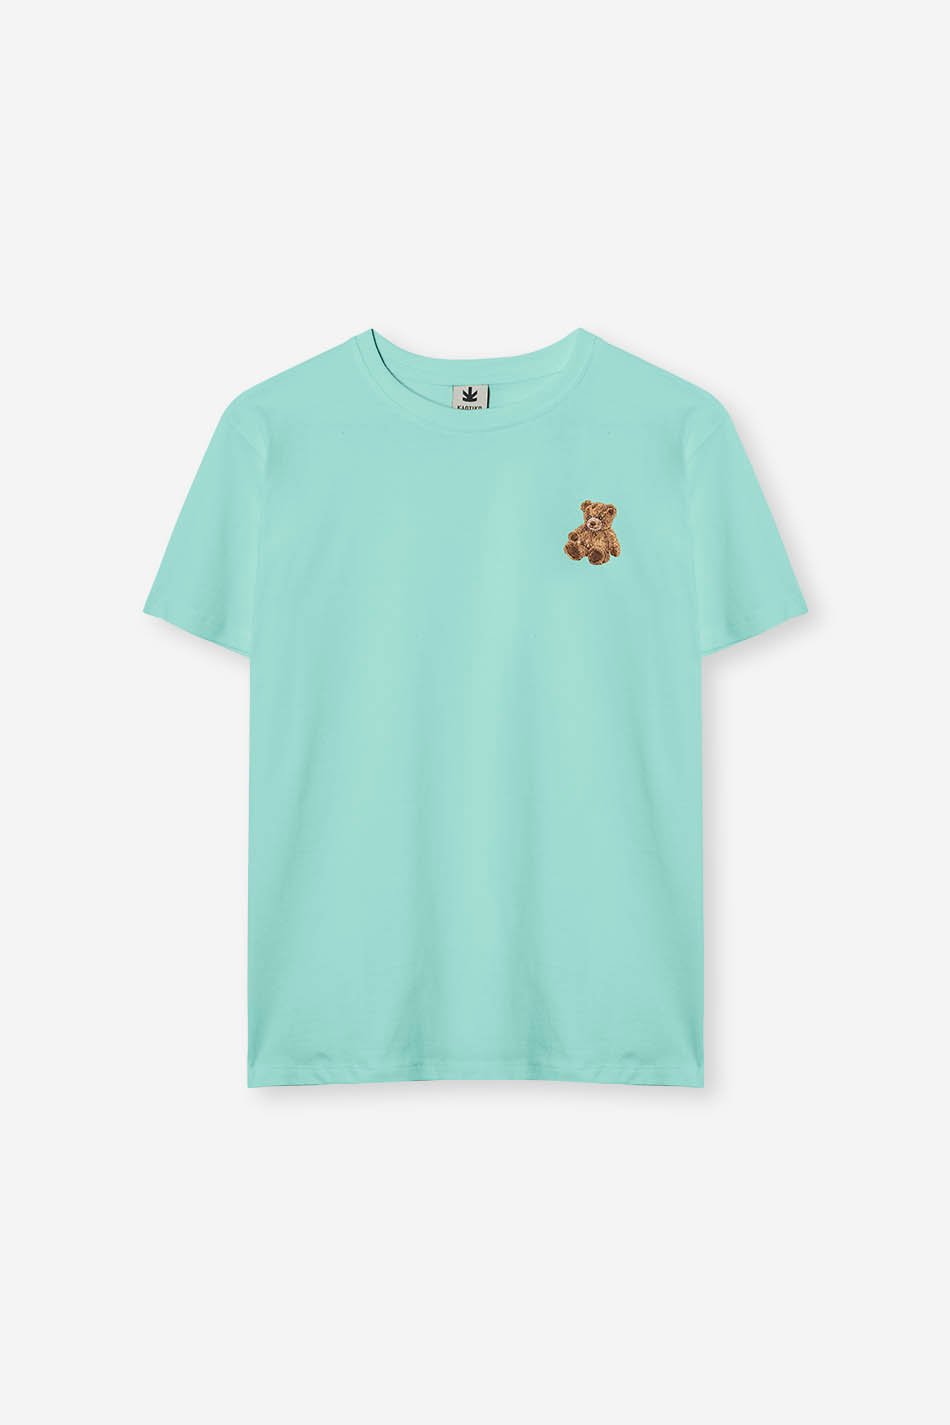 Camiseta Bear Toscana